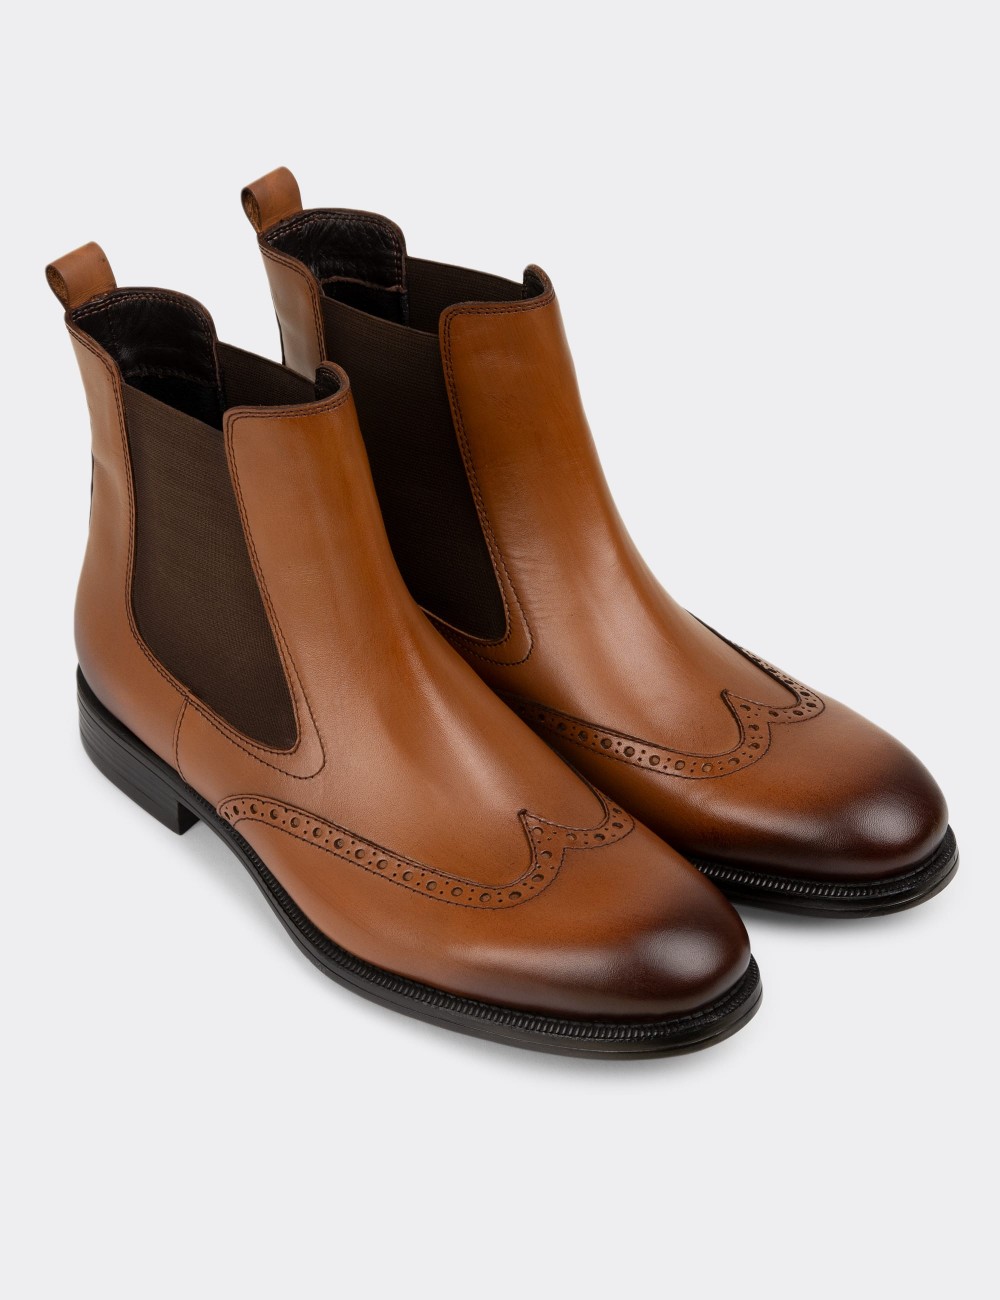 Tan Leather Chelsea Boots - 01920MTBAC01